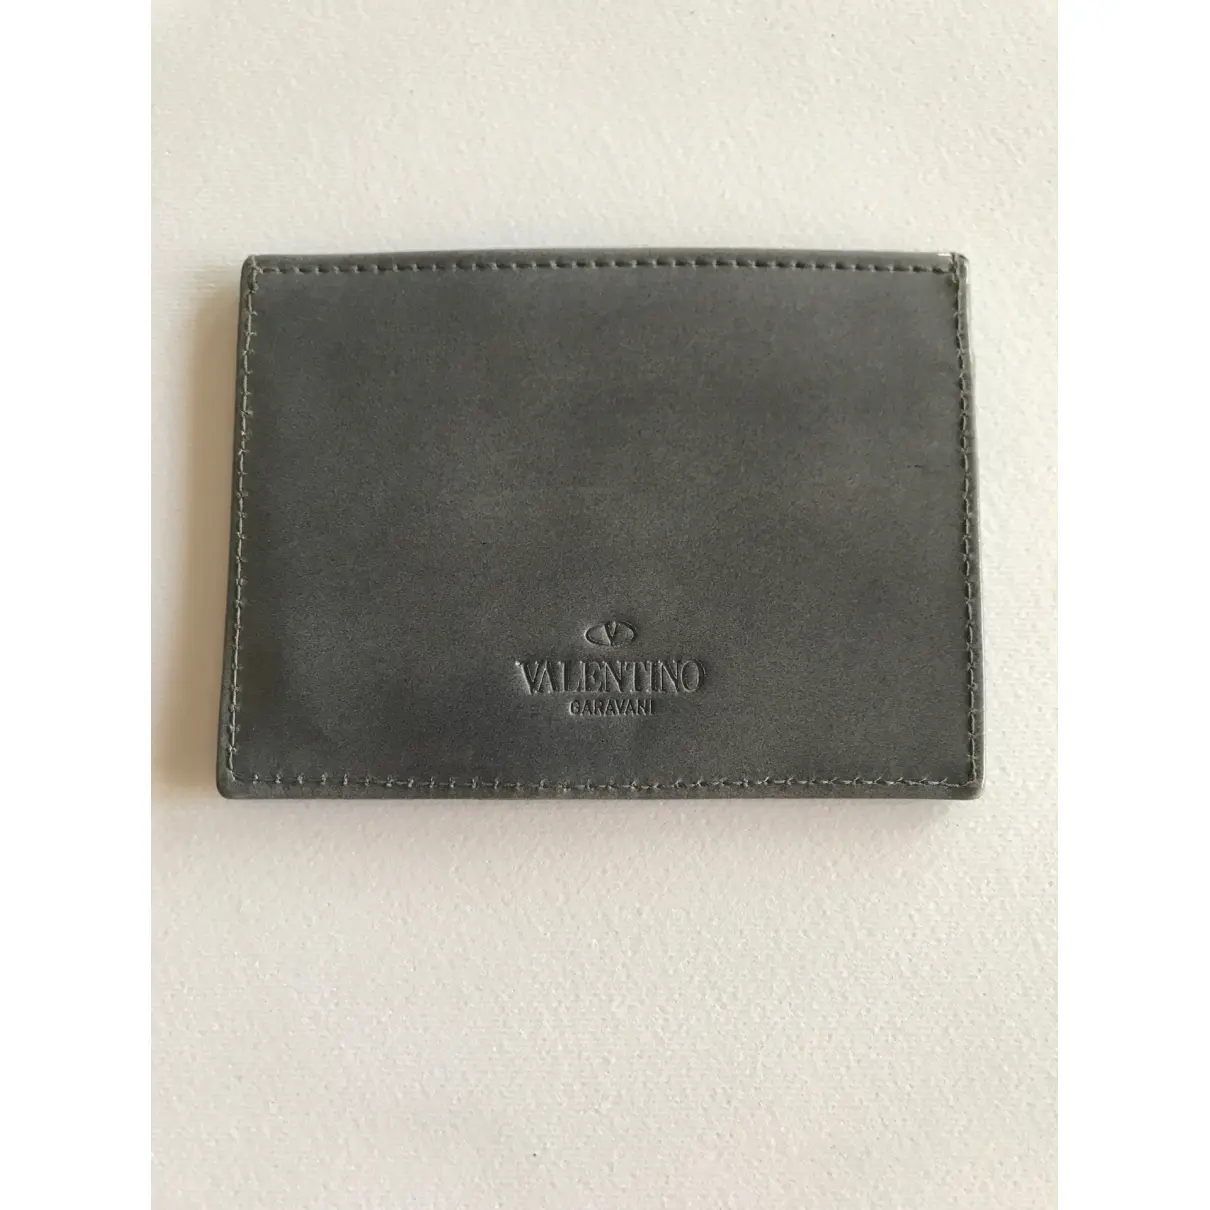 Buy Valentino Garavani Leather small bag online